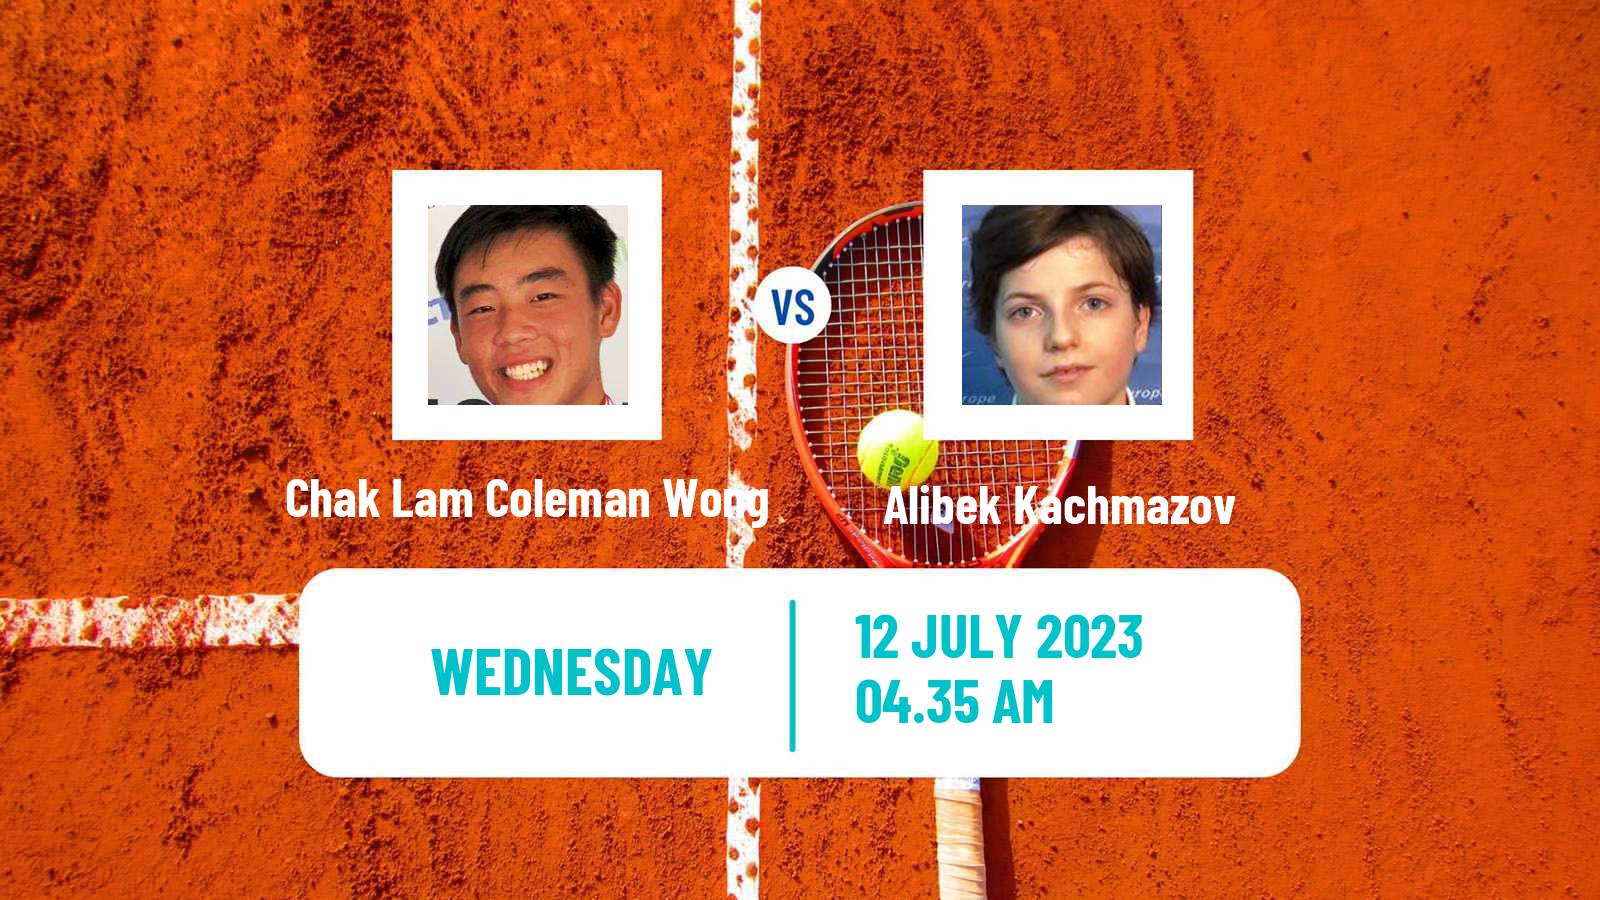 Tennis ITF M25 Roda De Bara Men 2023 Chak Lam Coleman Wong - Alibek Kachmazov